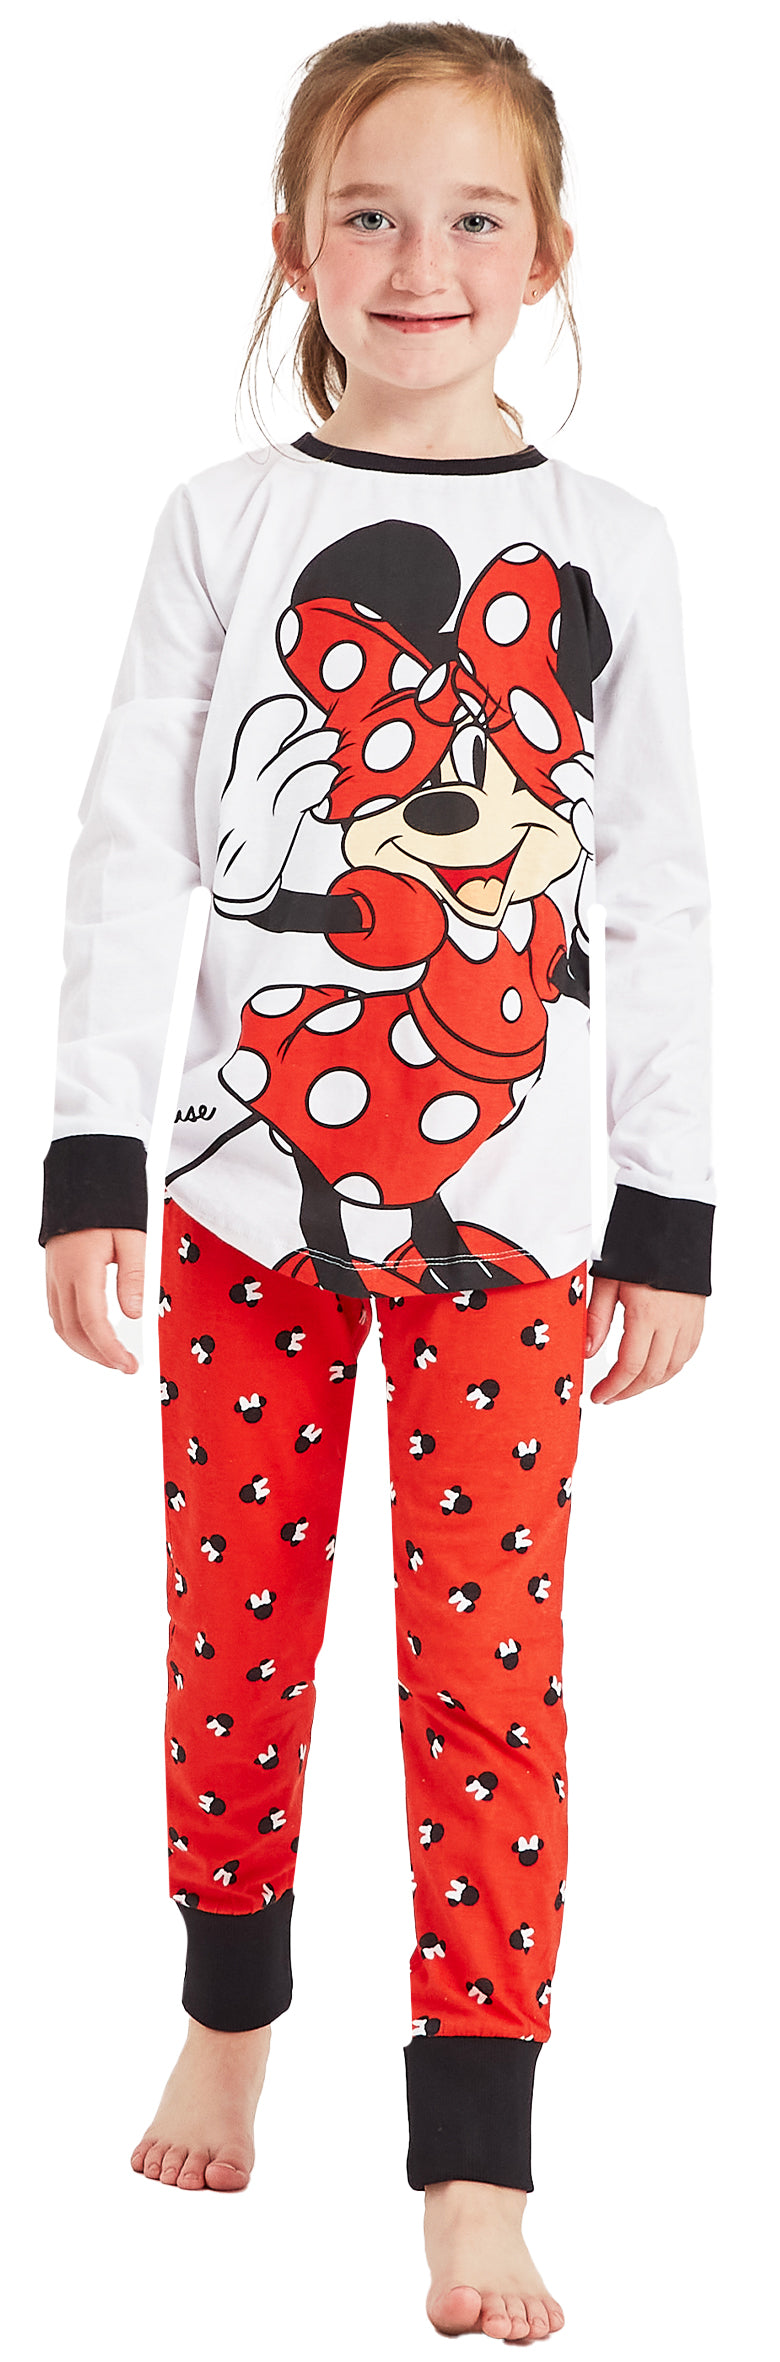 Girls Disney Minnie Mouse Pyjamas and Dressing Gown Set Bundle